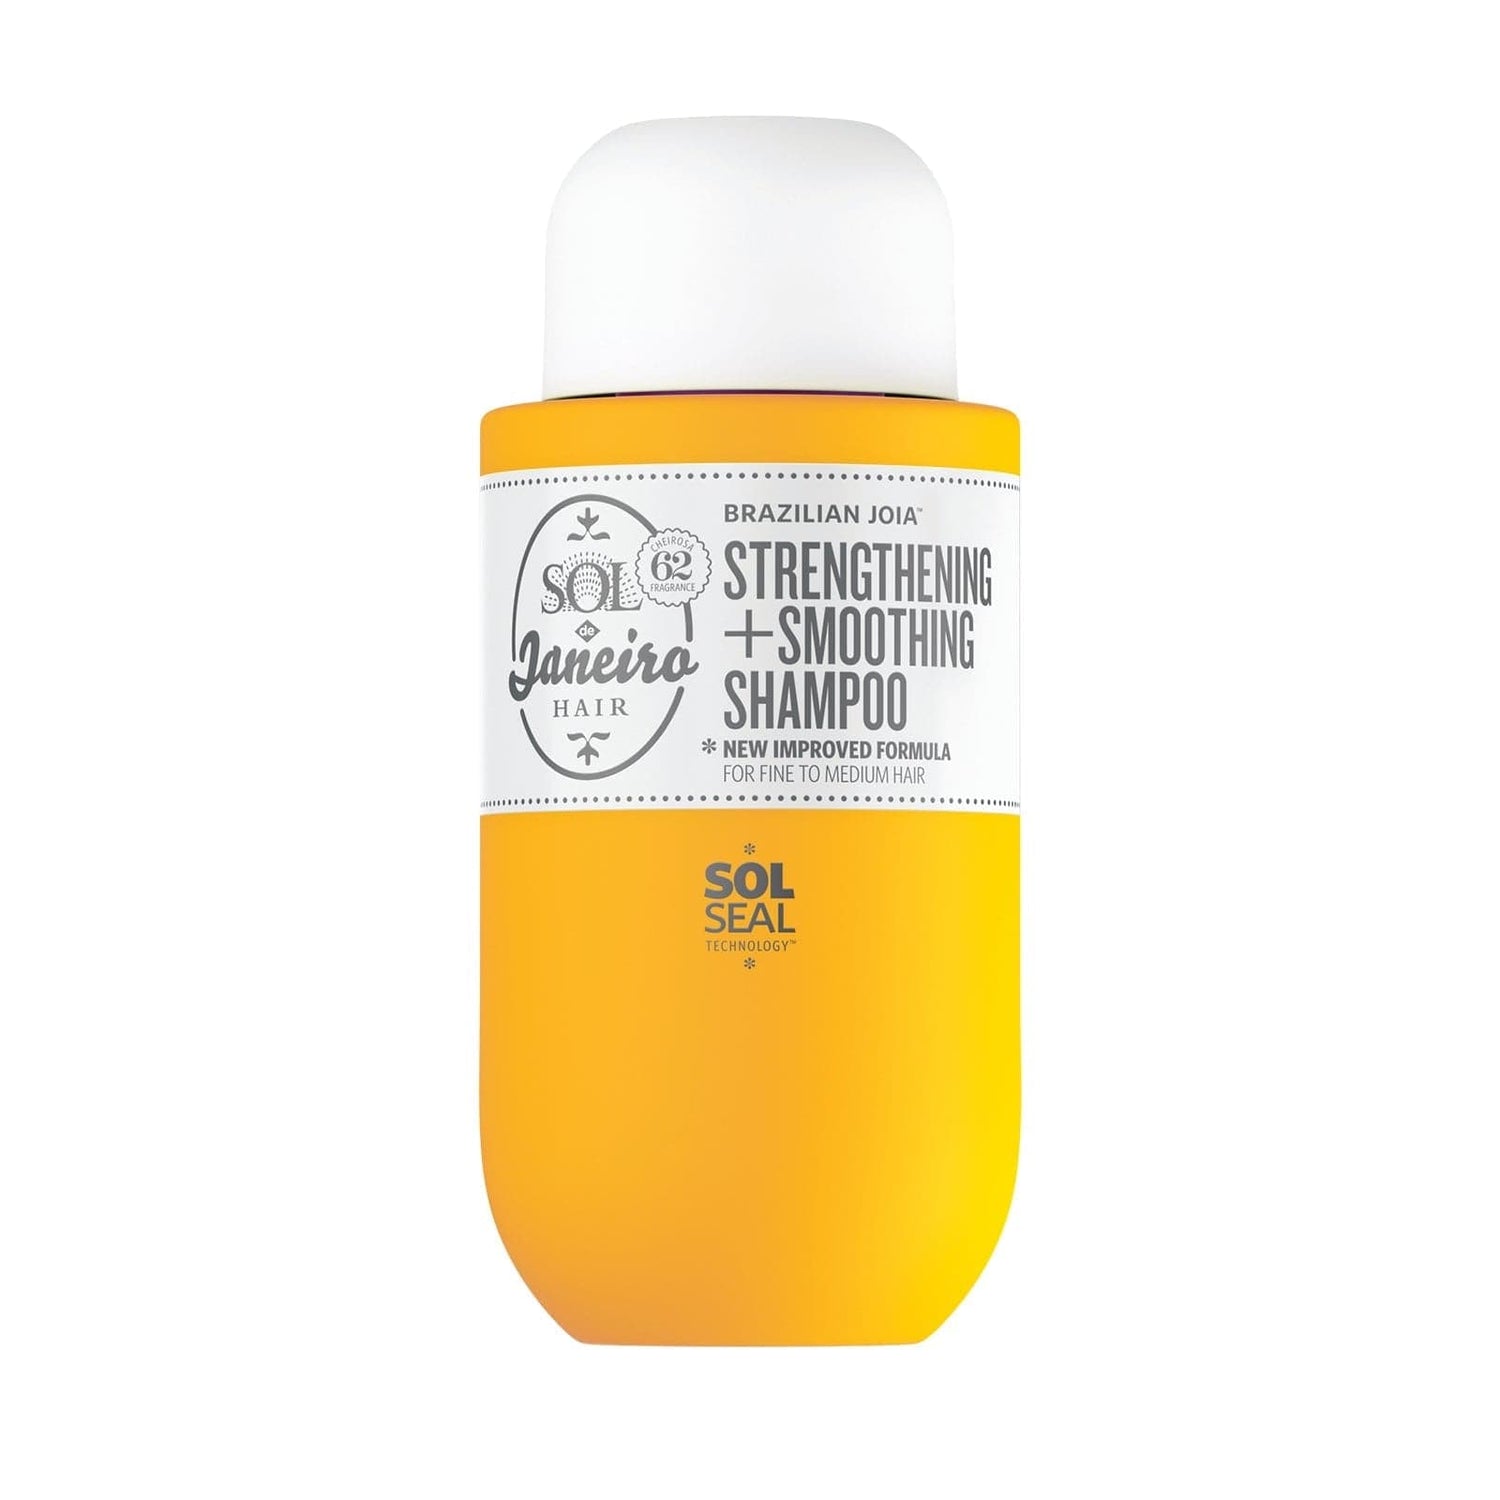 Brazilian joia strengthening + smoothing shampoo 90ml